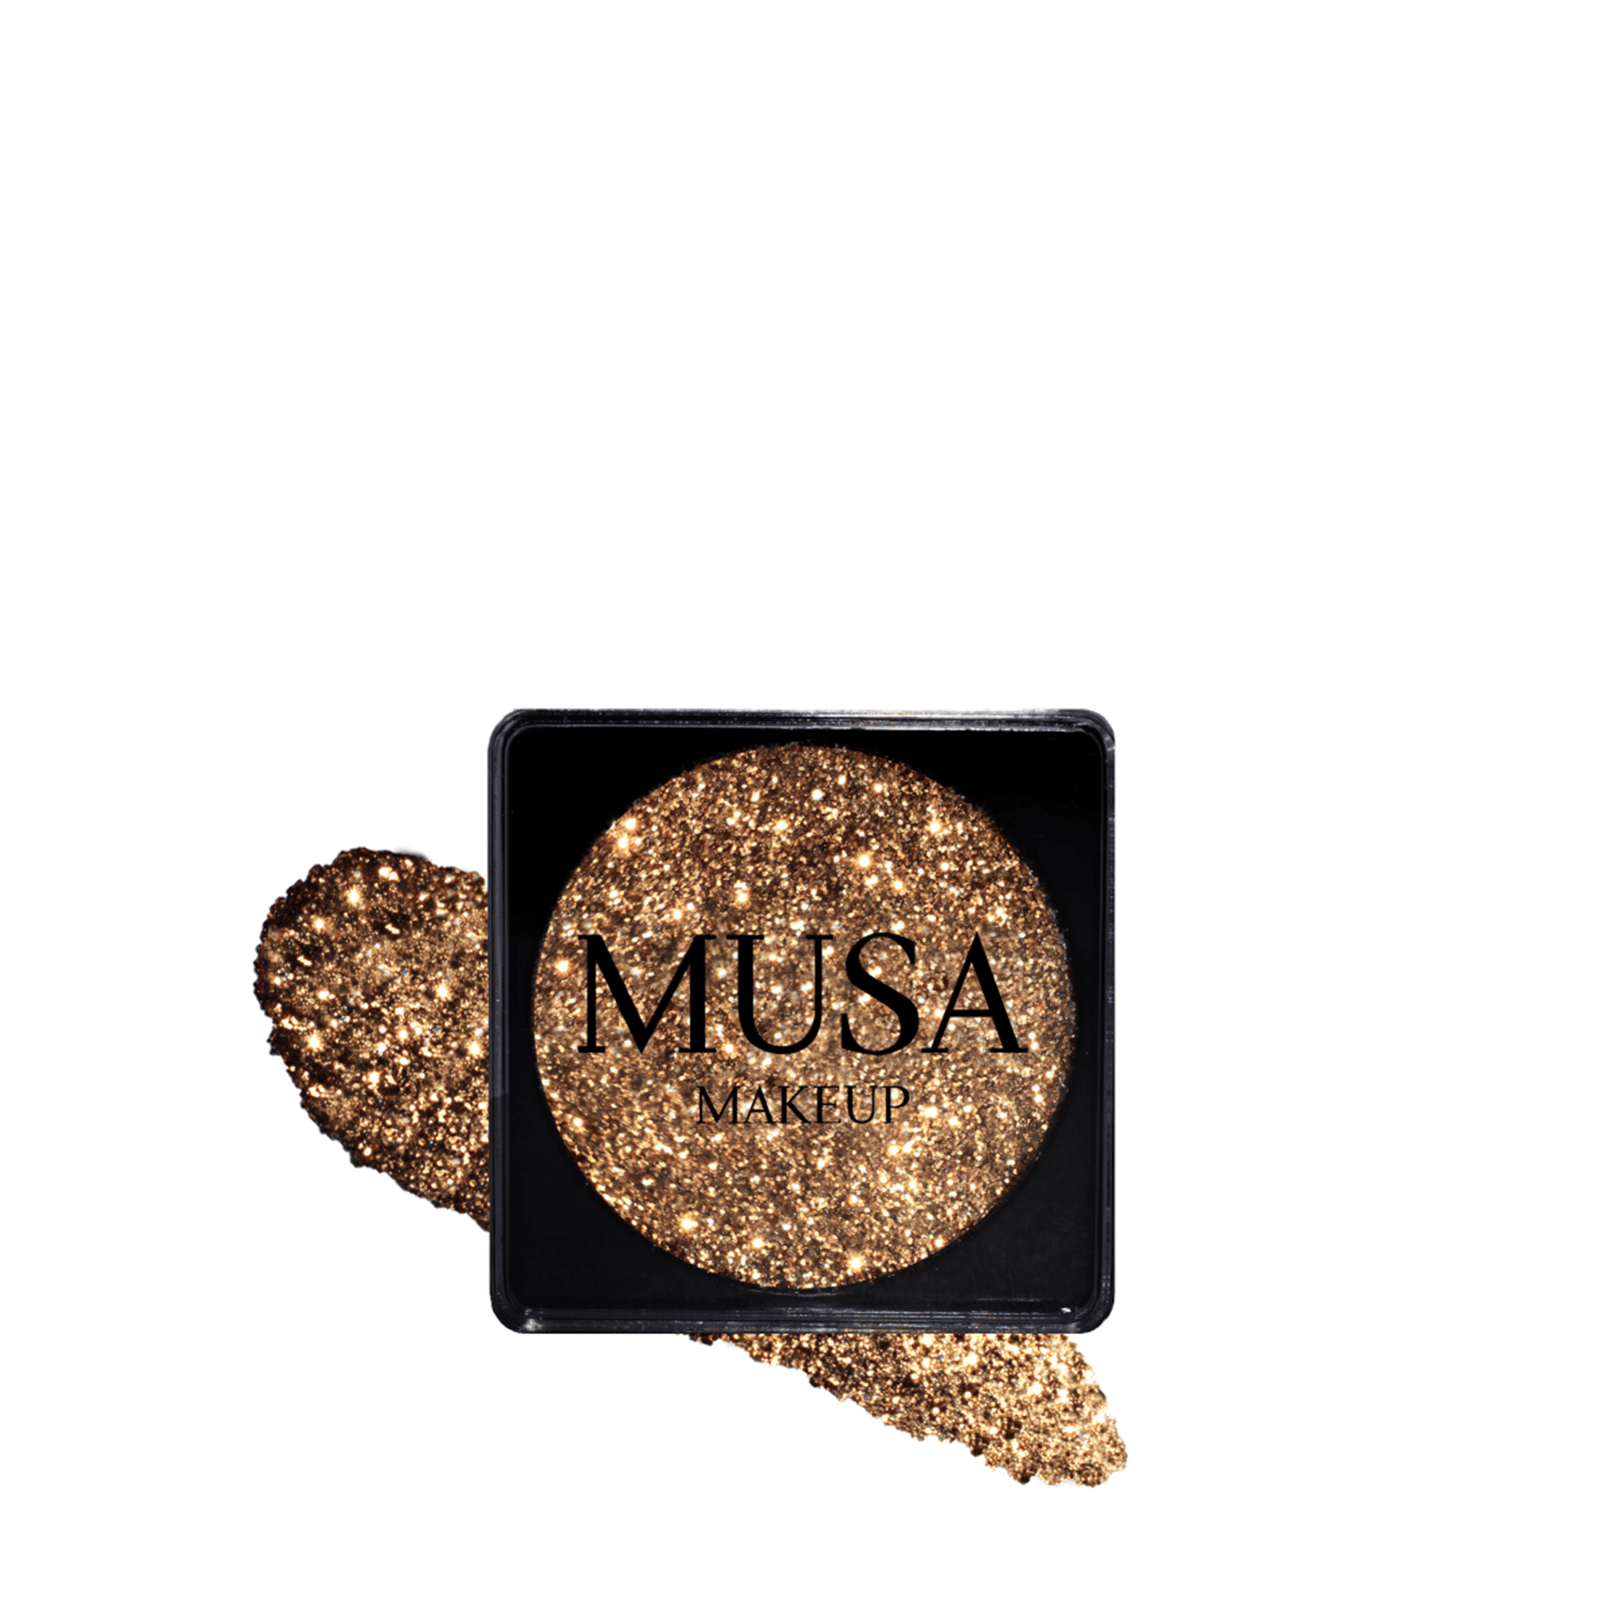 MUSA Makeup Creamy Glitter Nubia 4g (0.14 oz)